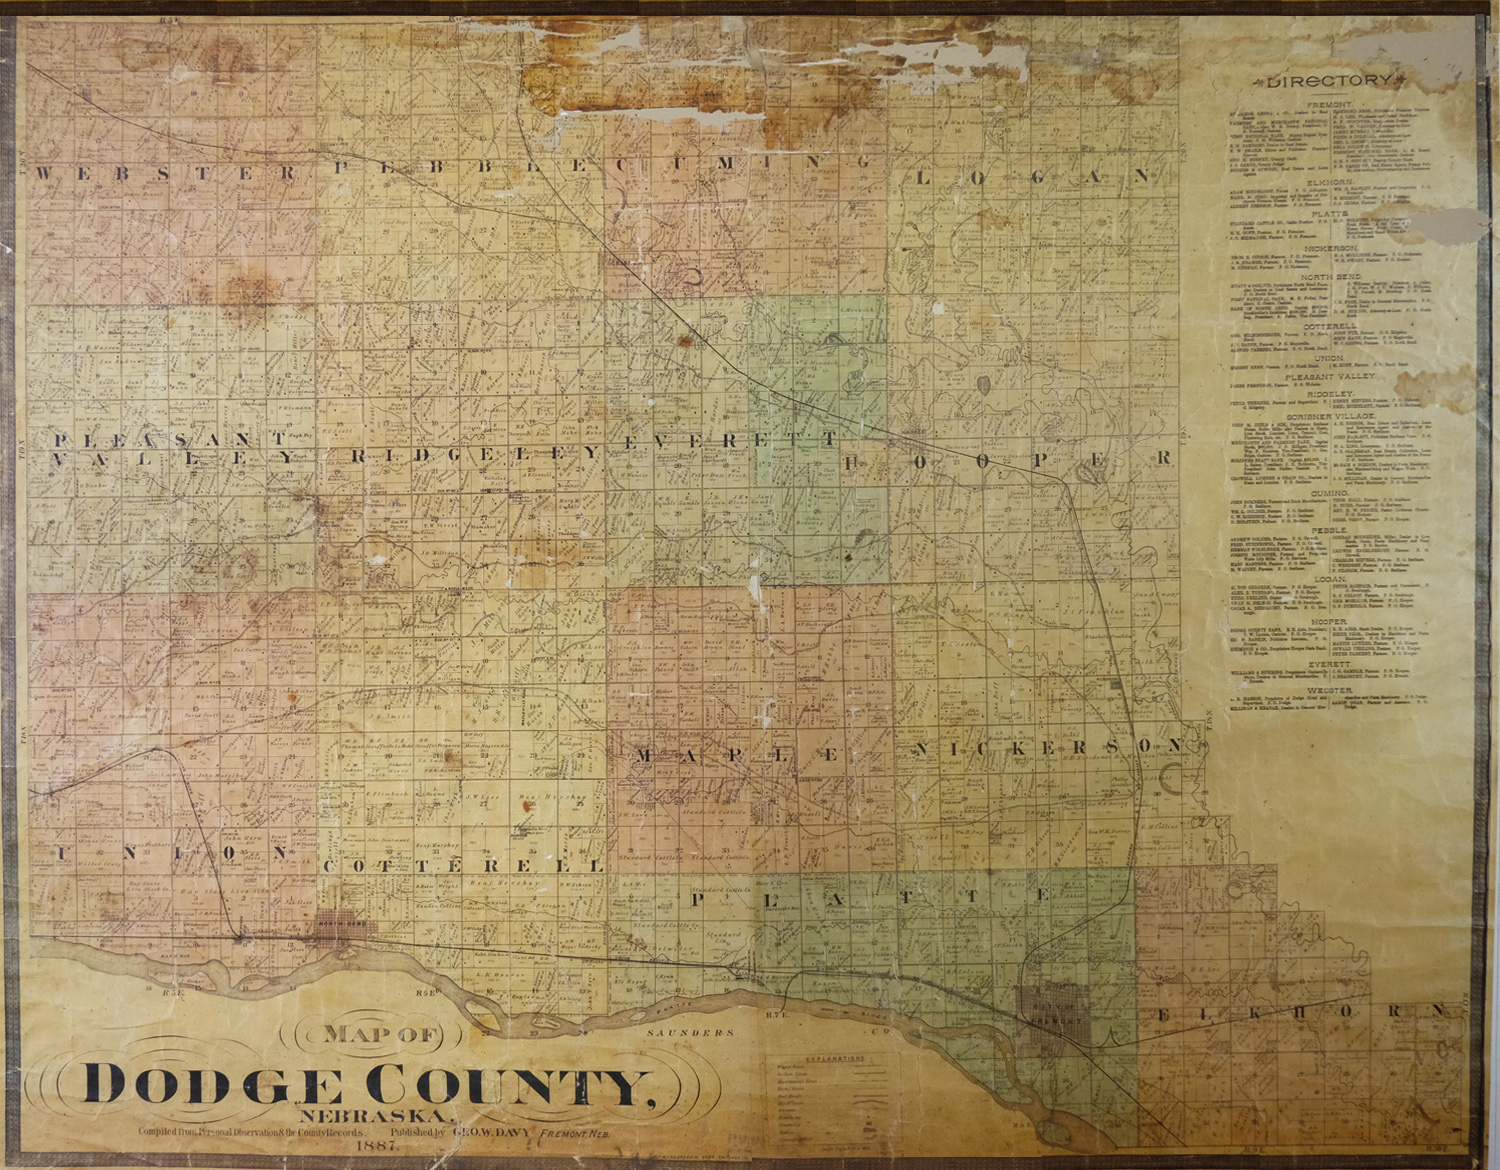 Dodge county 1887